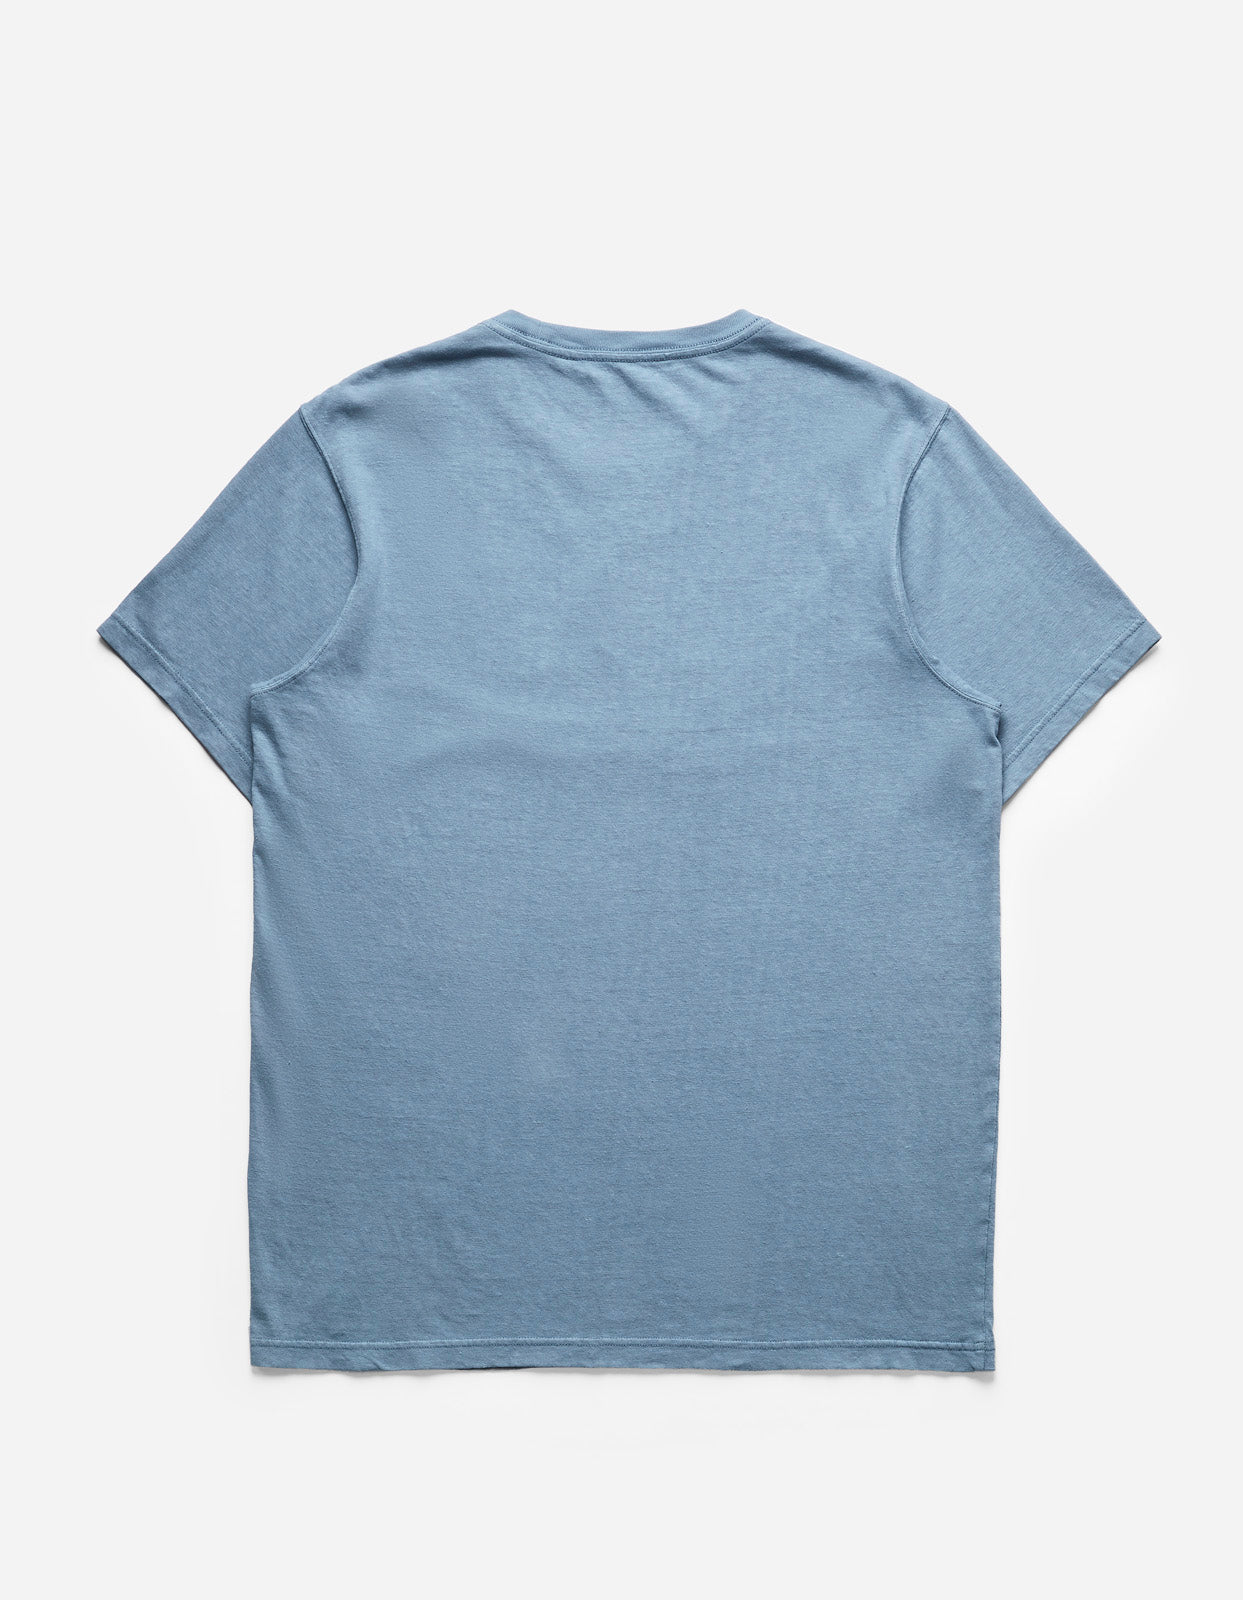 5019 30th Anniversary Dragon T-Shirt Subdued Blue